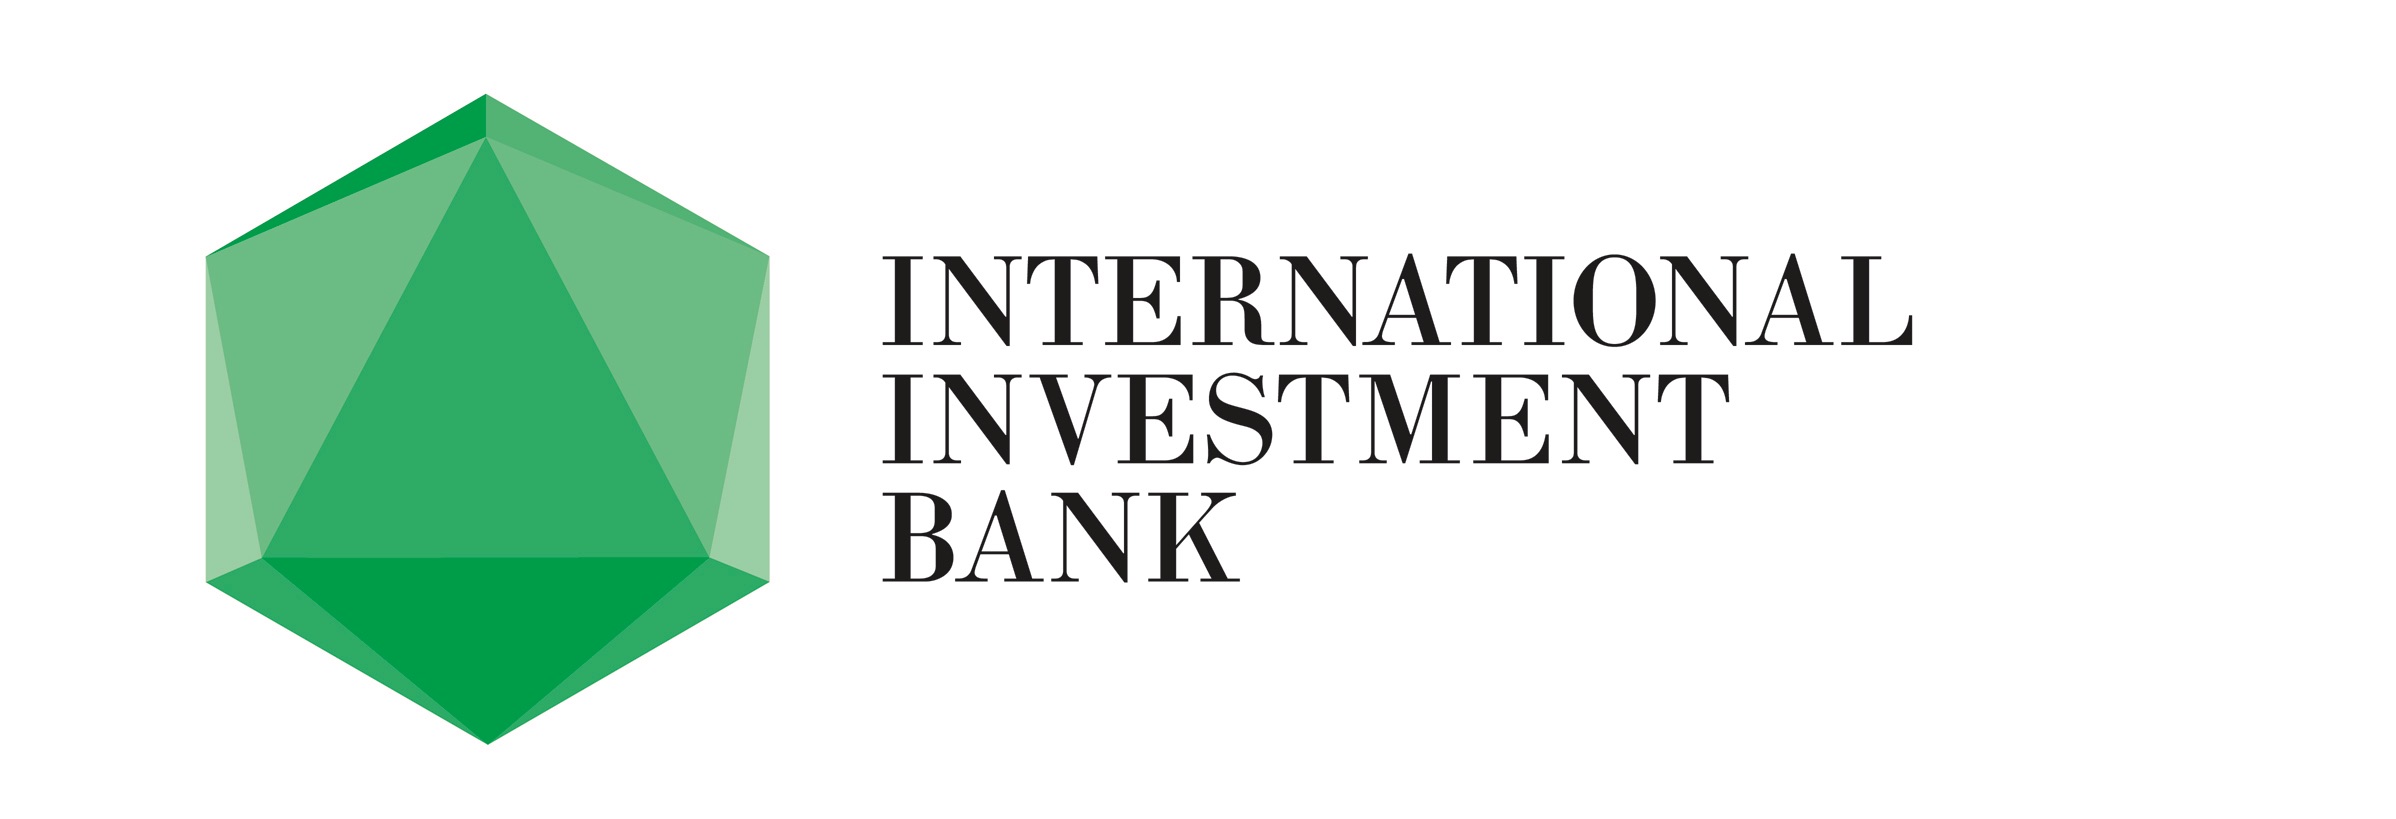 International Investment Bank (IIB).